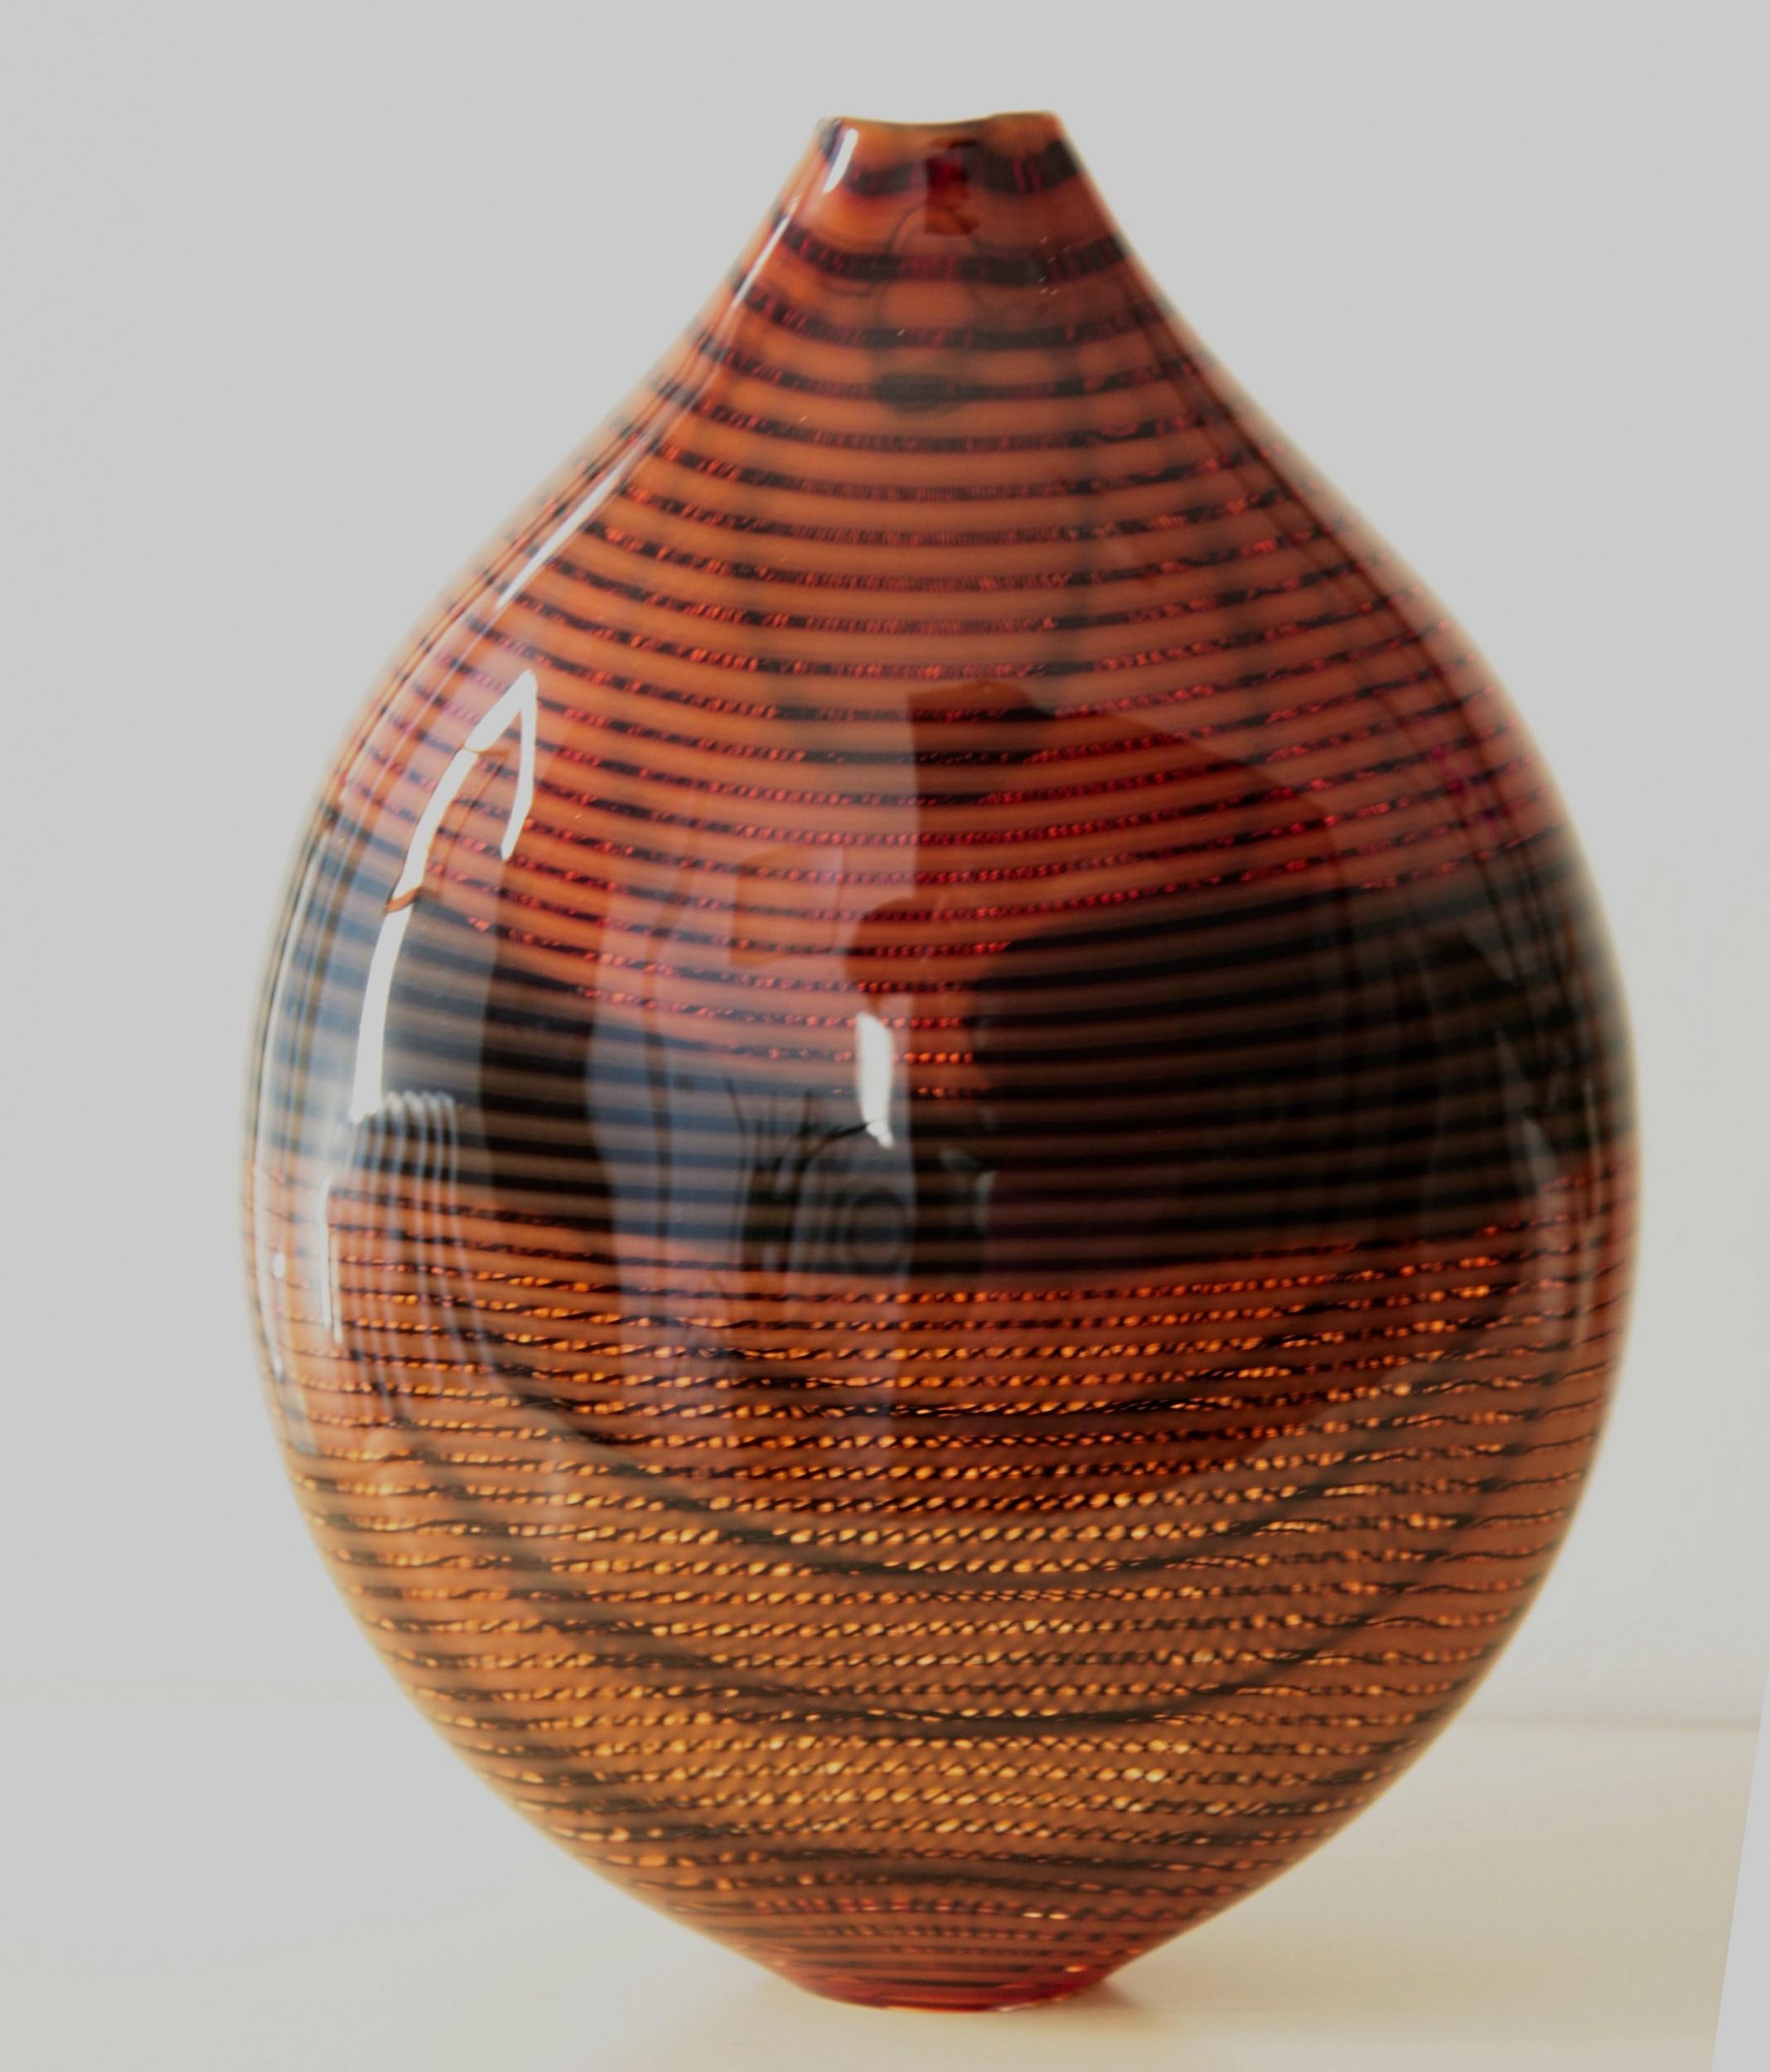 Lino Tagliapietra 2008, Burnt Orange and Black Smalto Vase, Signed 9